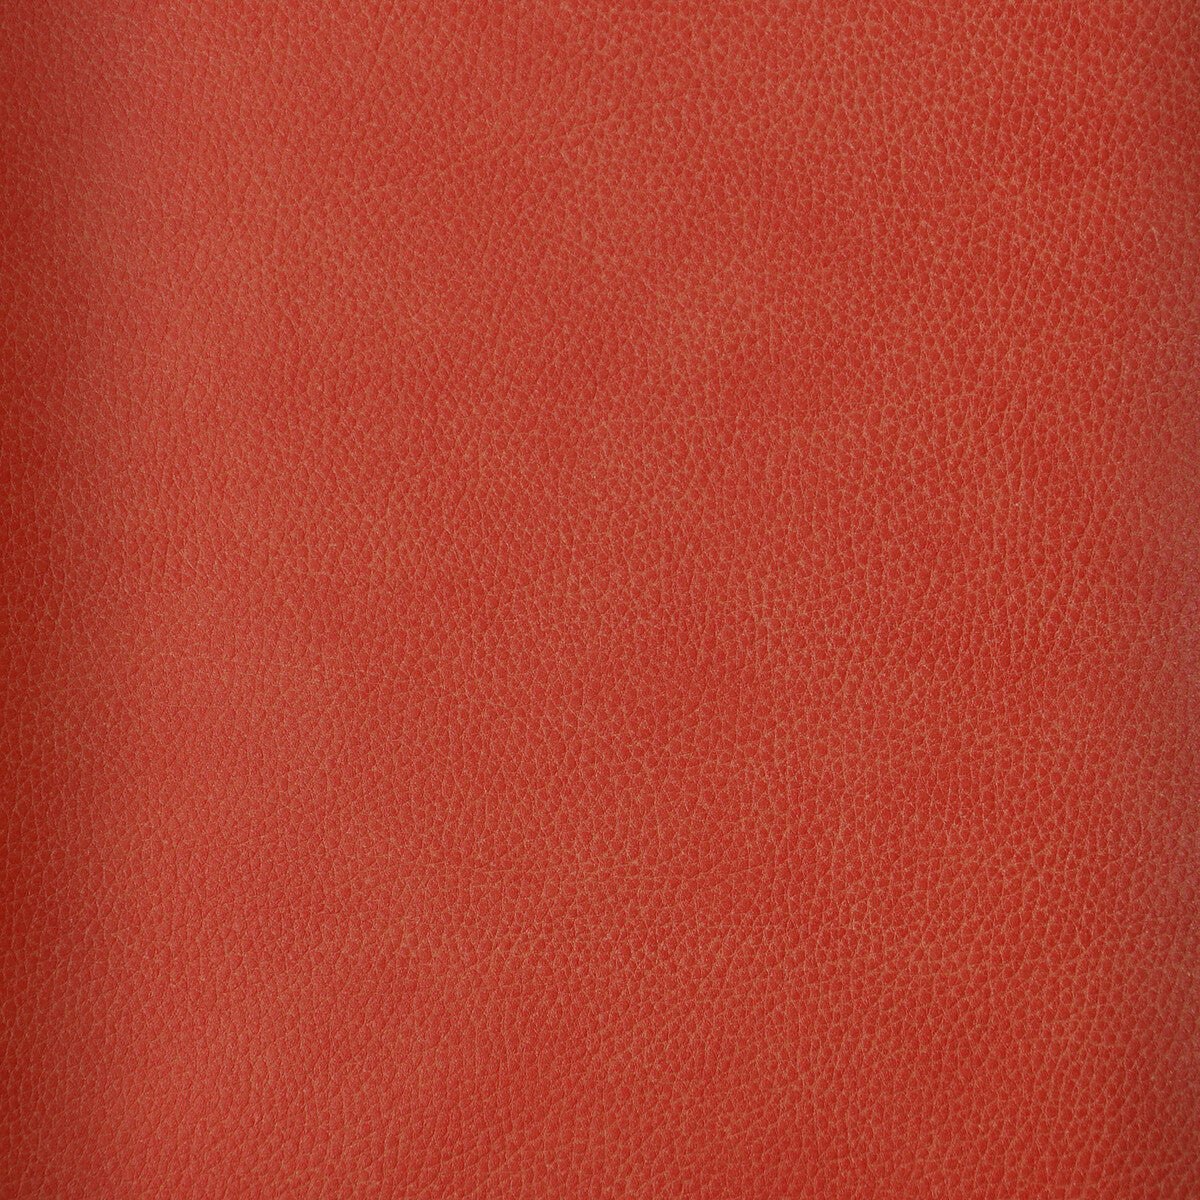 Kravet Design fabric in loris-124 color - pattern LORIS.124.0 - by Kravet Design